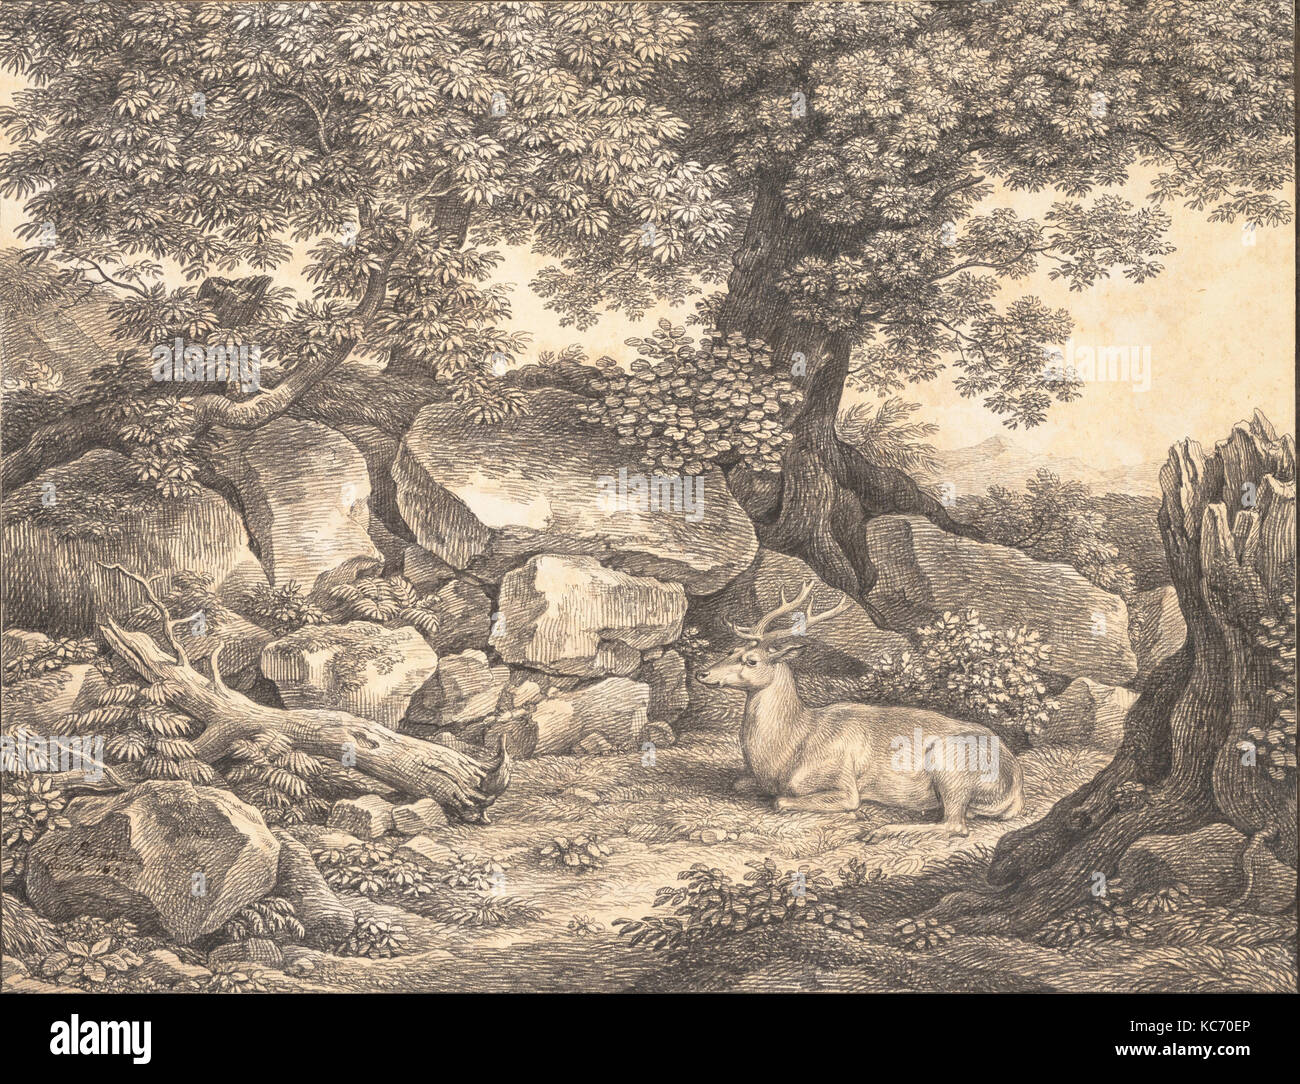 Italian Landscape with Trees, Rocks and a Resting Deer, Johann Christian Reinhart, 1824 Stock Photo